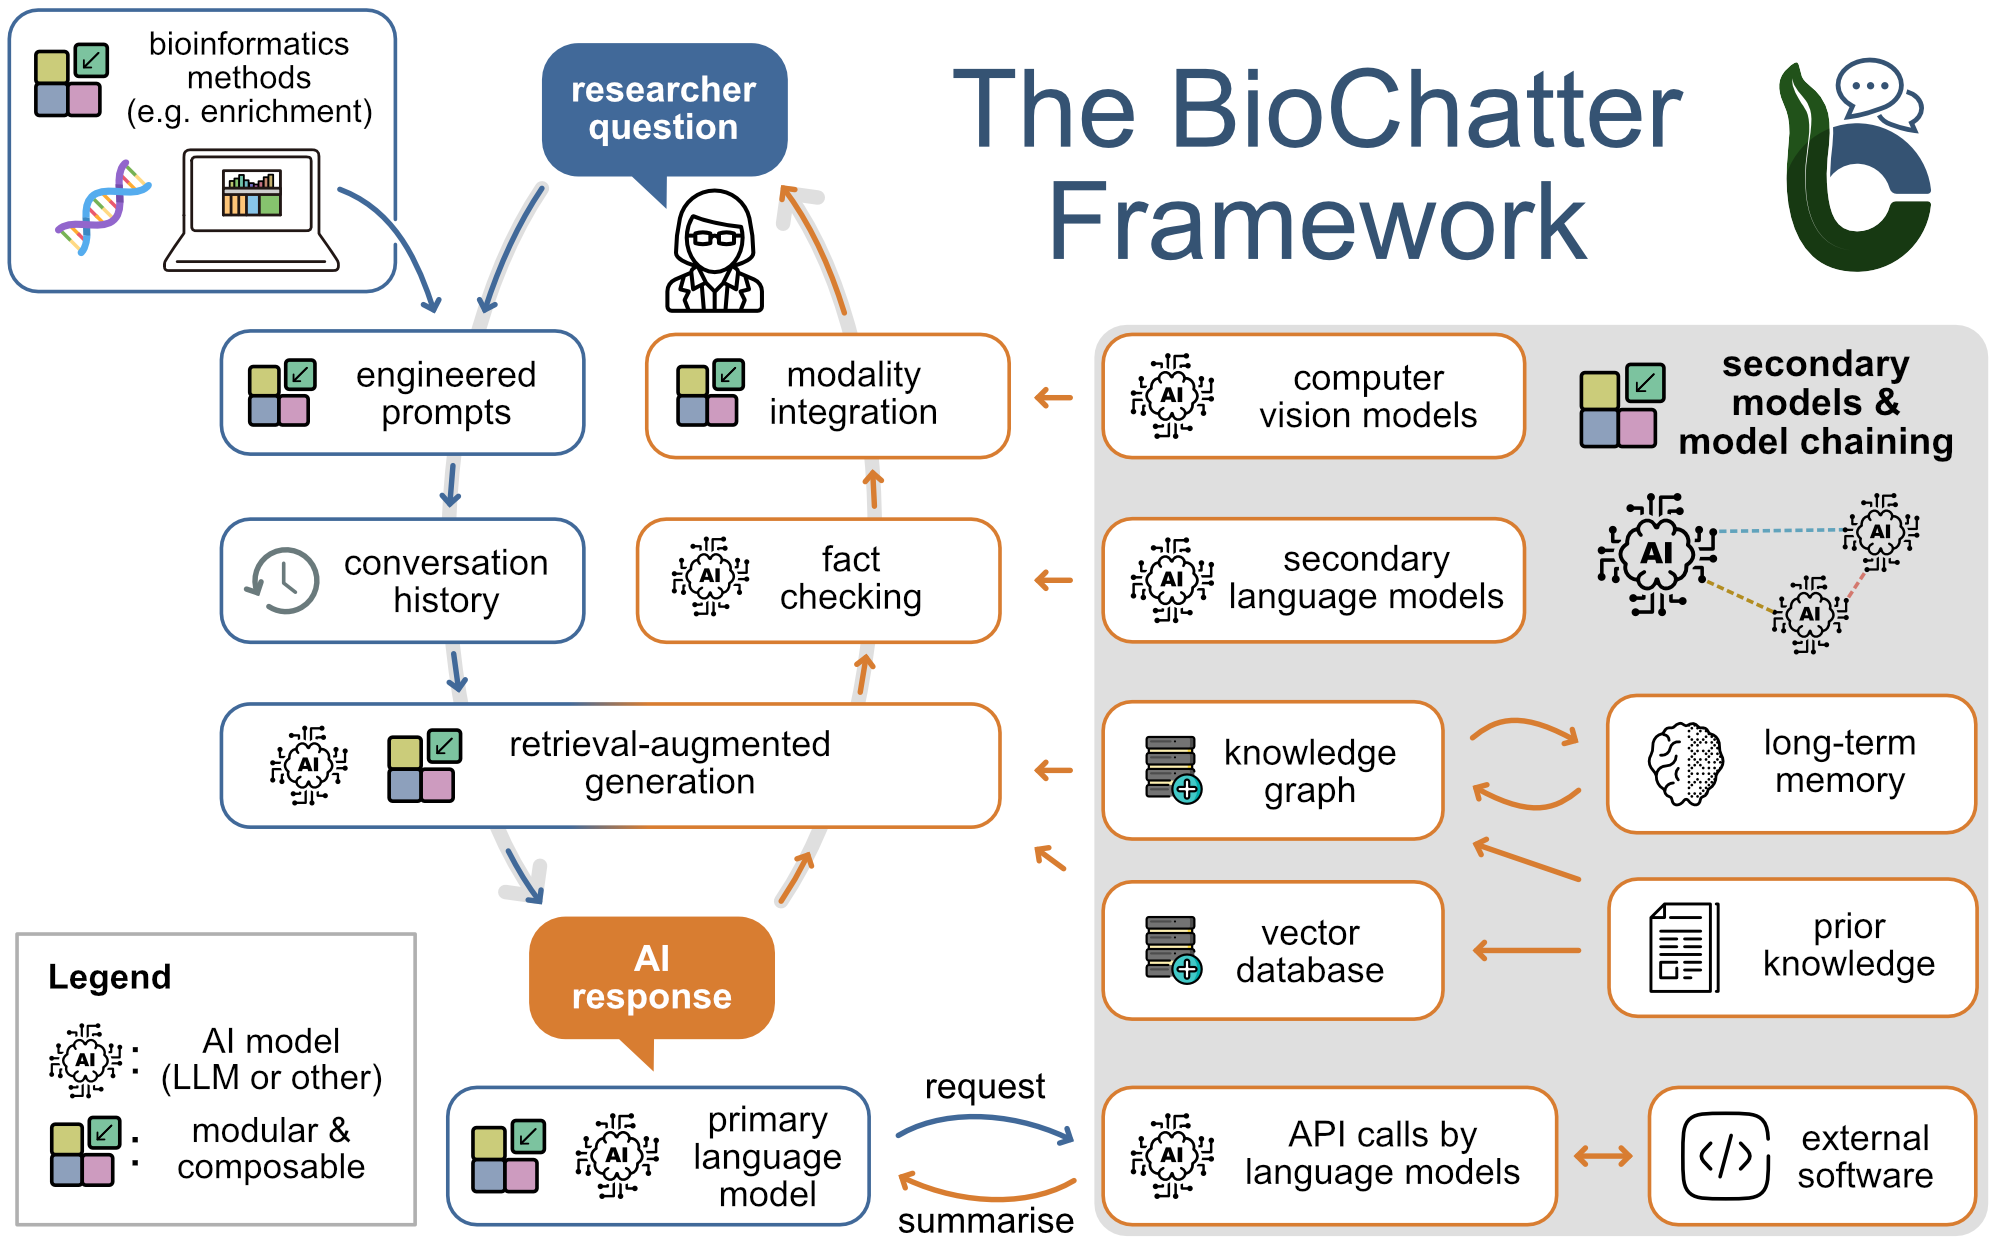 BioChatter Overview